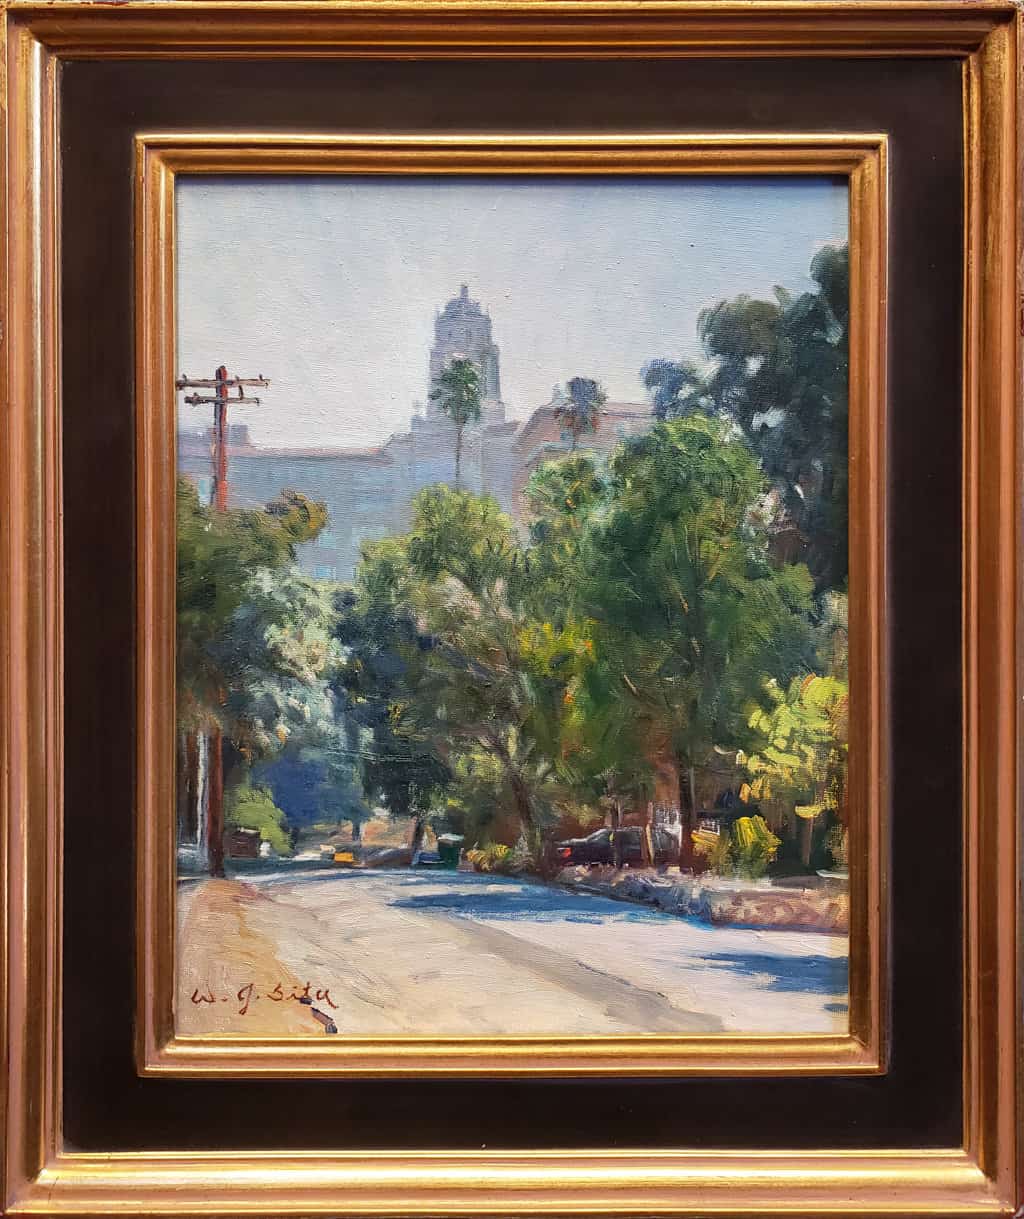 American Legacy Fine Arts presents "Pasadena Atmosphere" a painting by W Jason Situ.